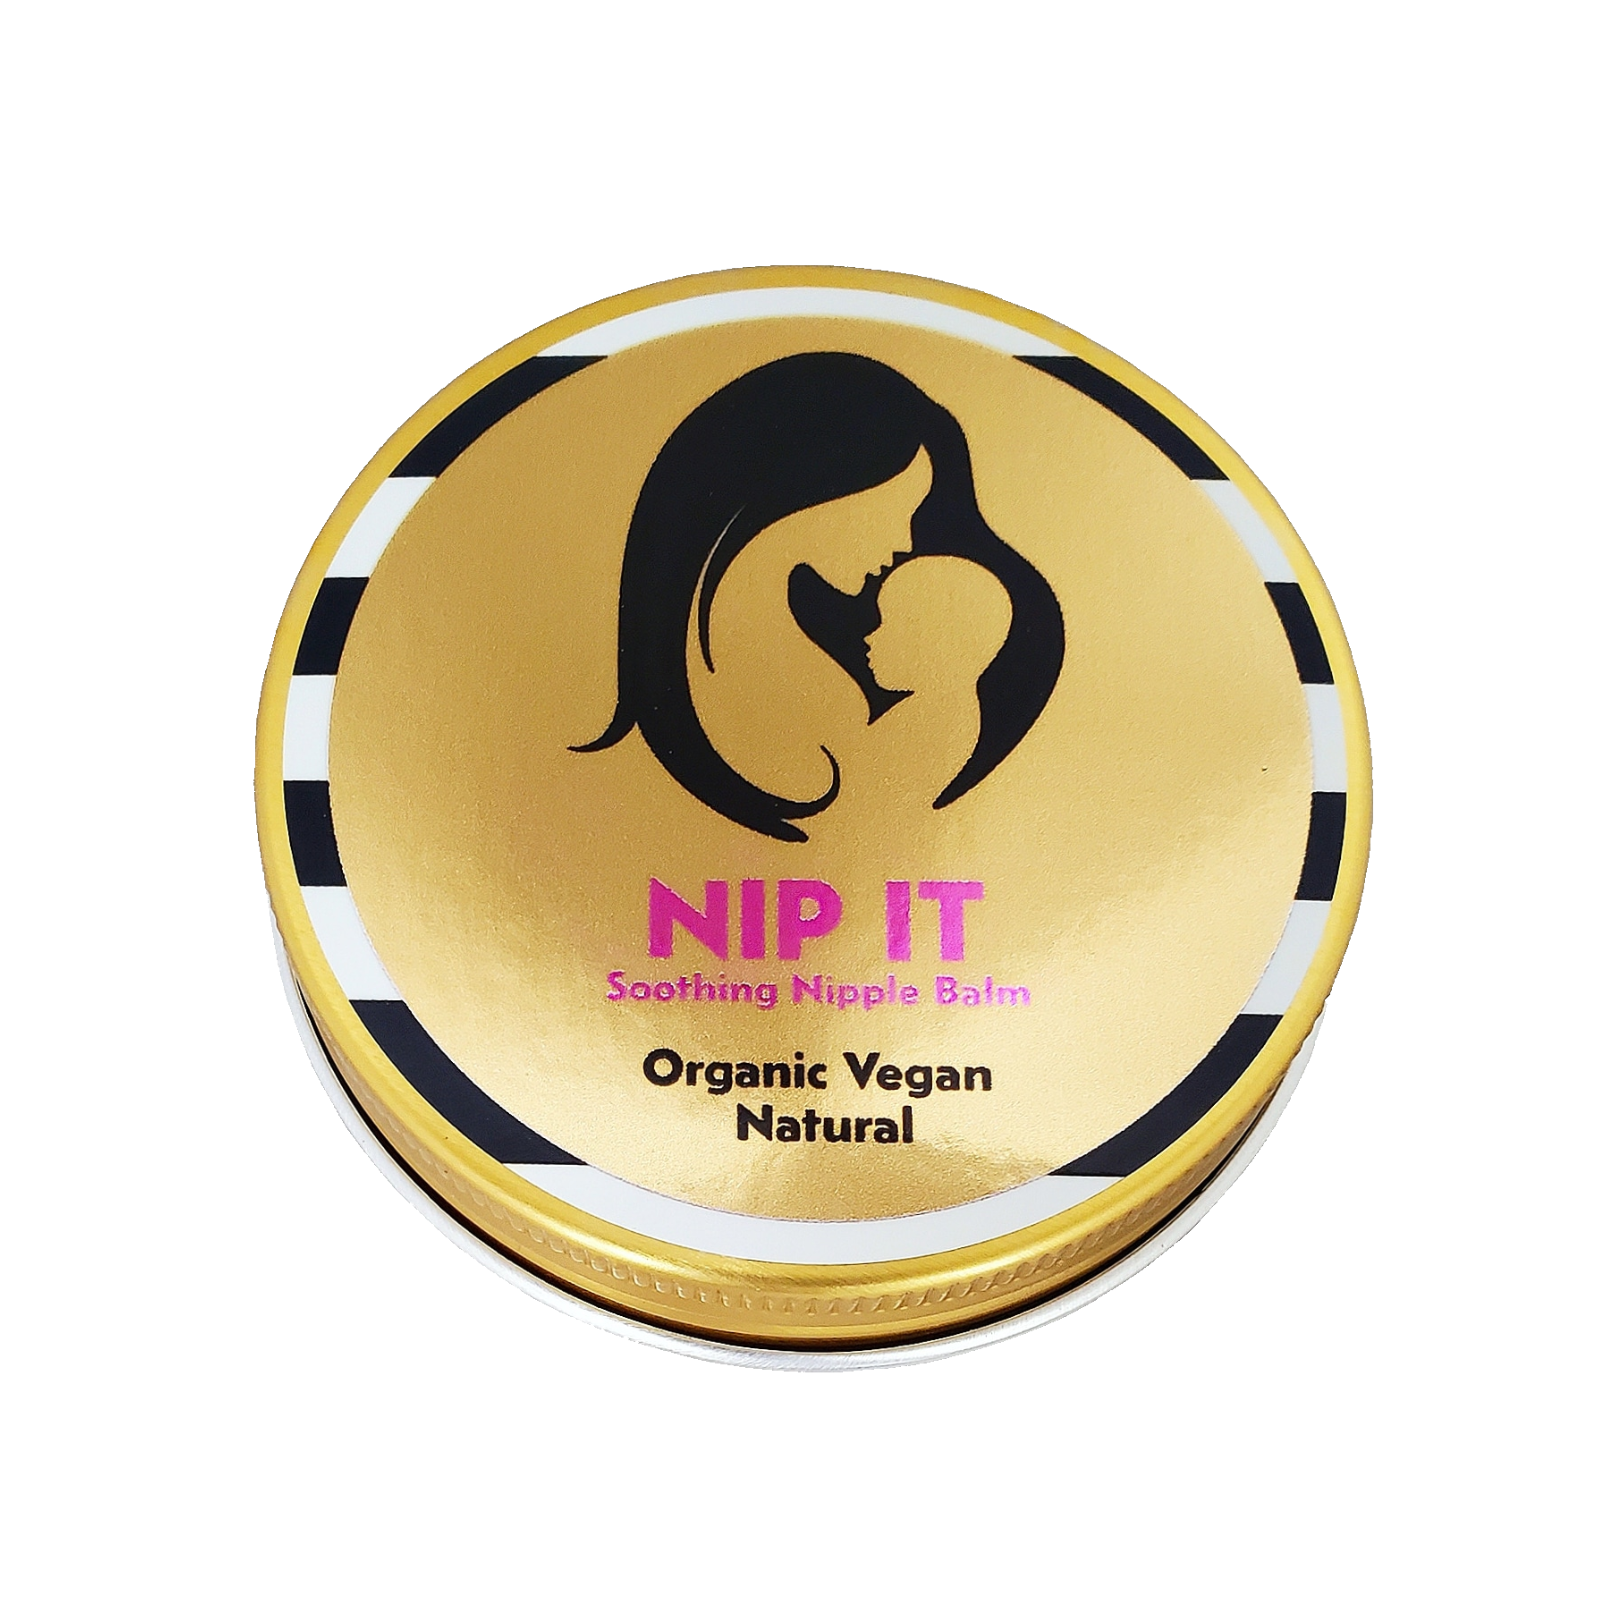 100% Natural Lanolin-free Nipple Cream for Breastfeeding